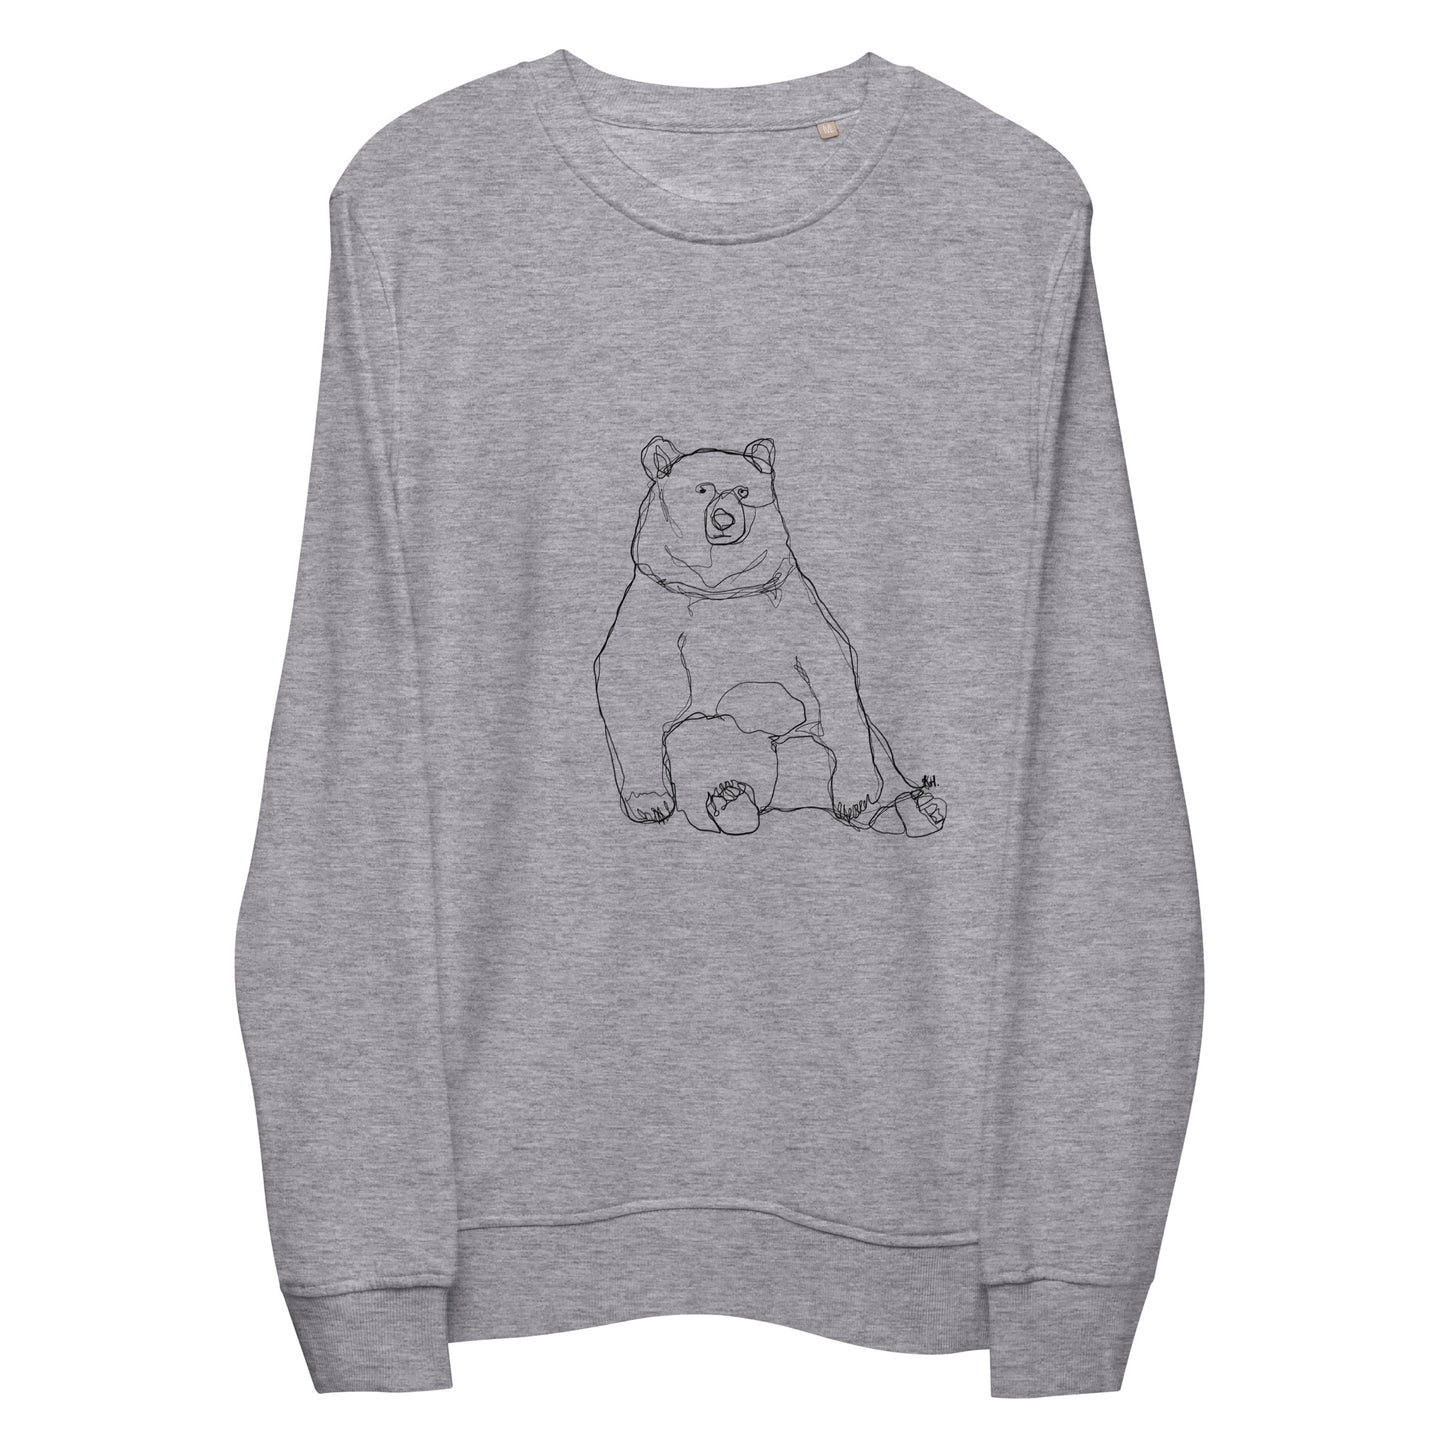 bear art line drawing sweater, line art sweater, animal line drawing sweater